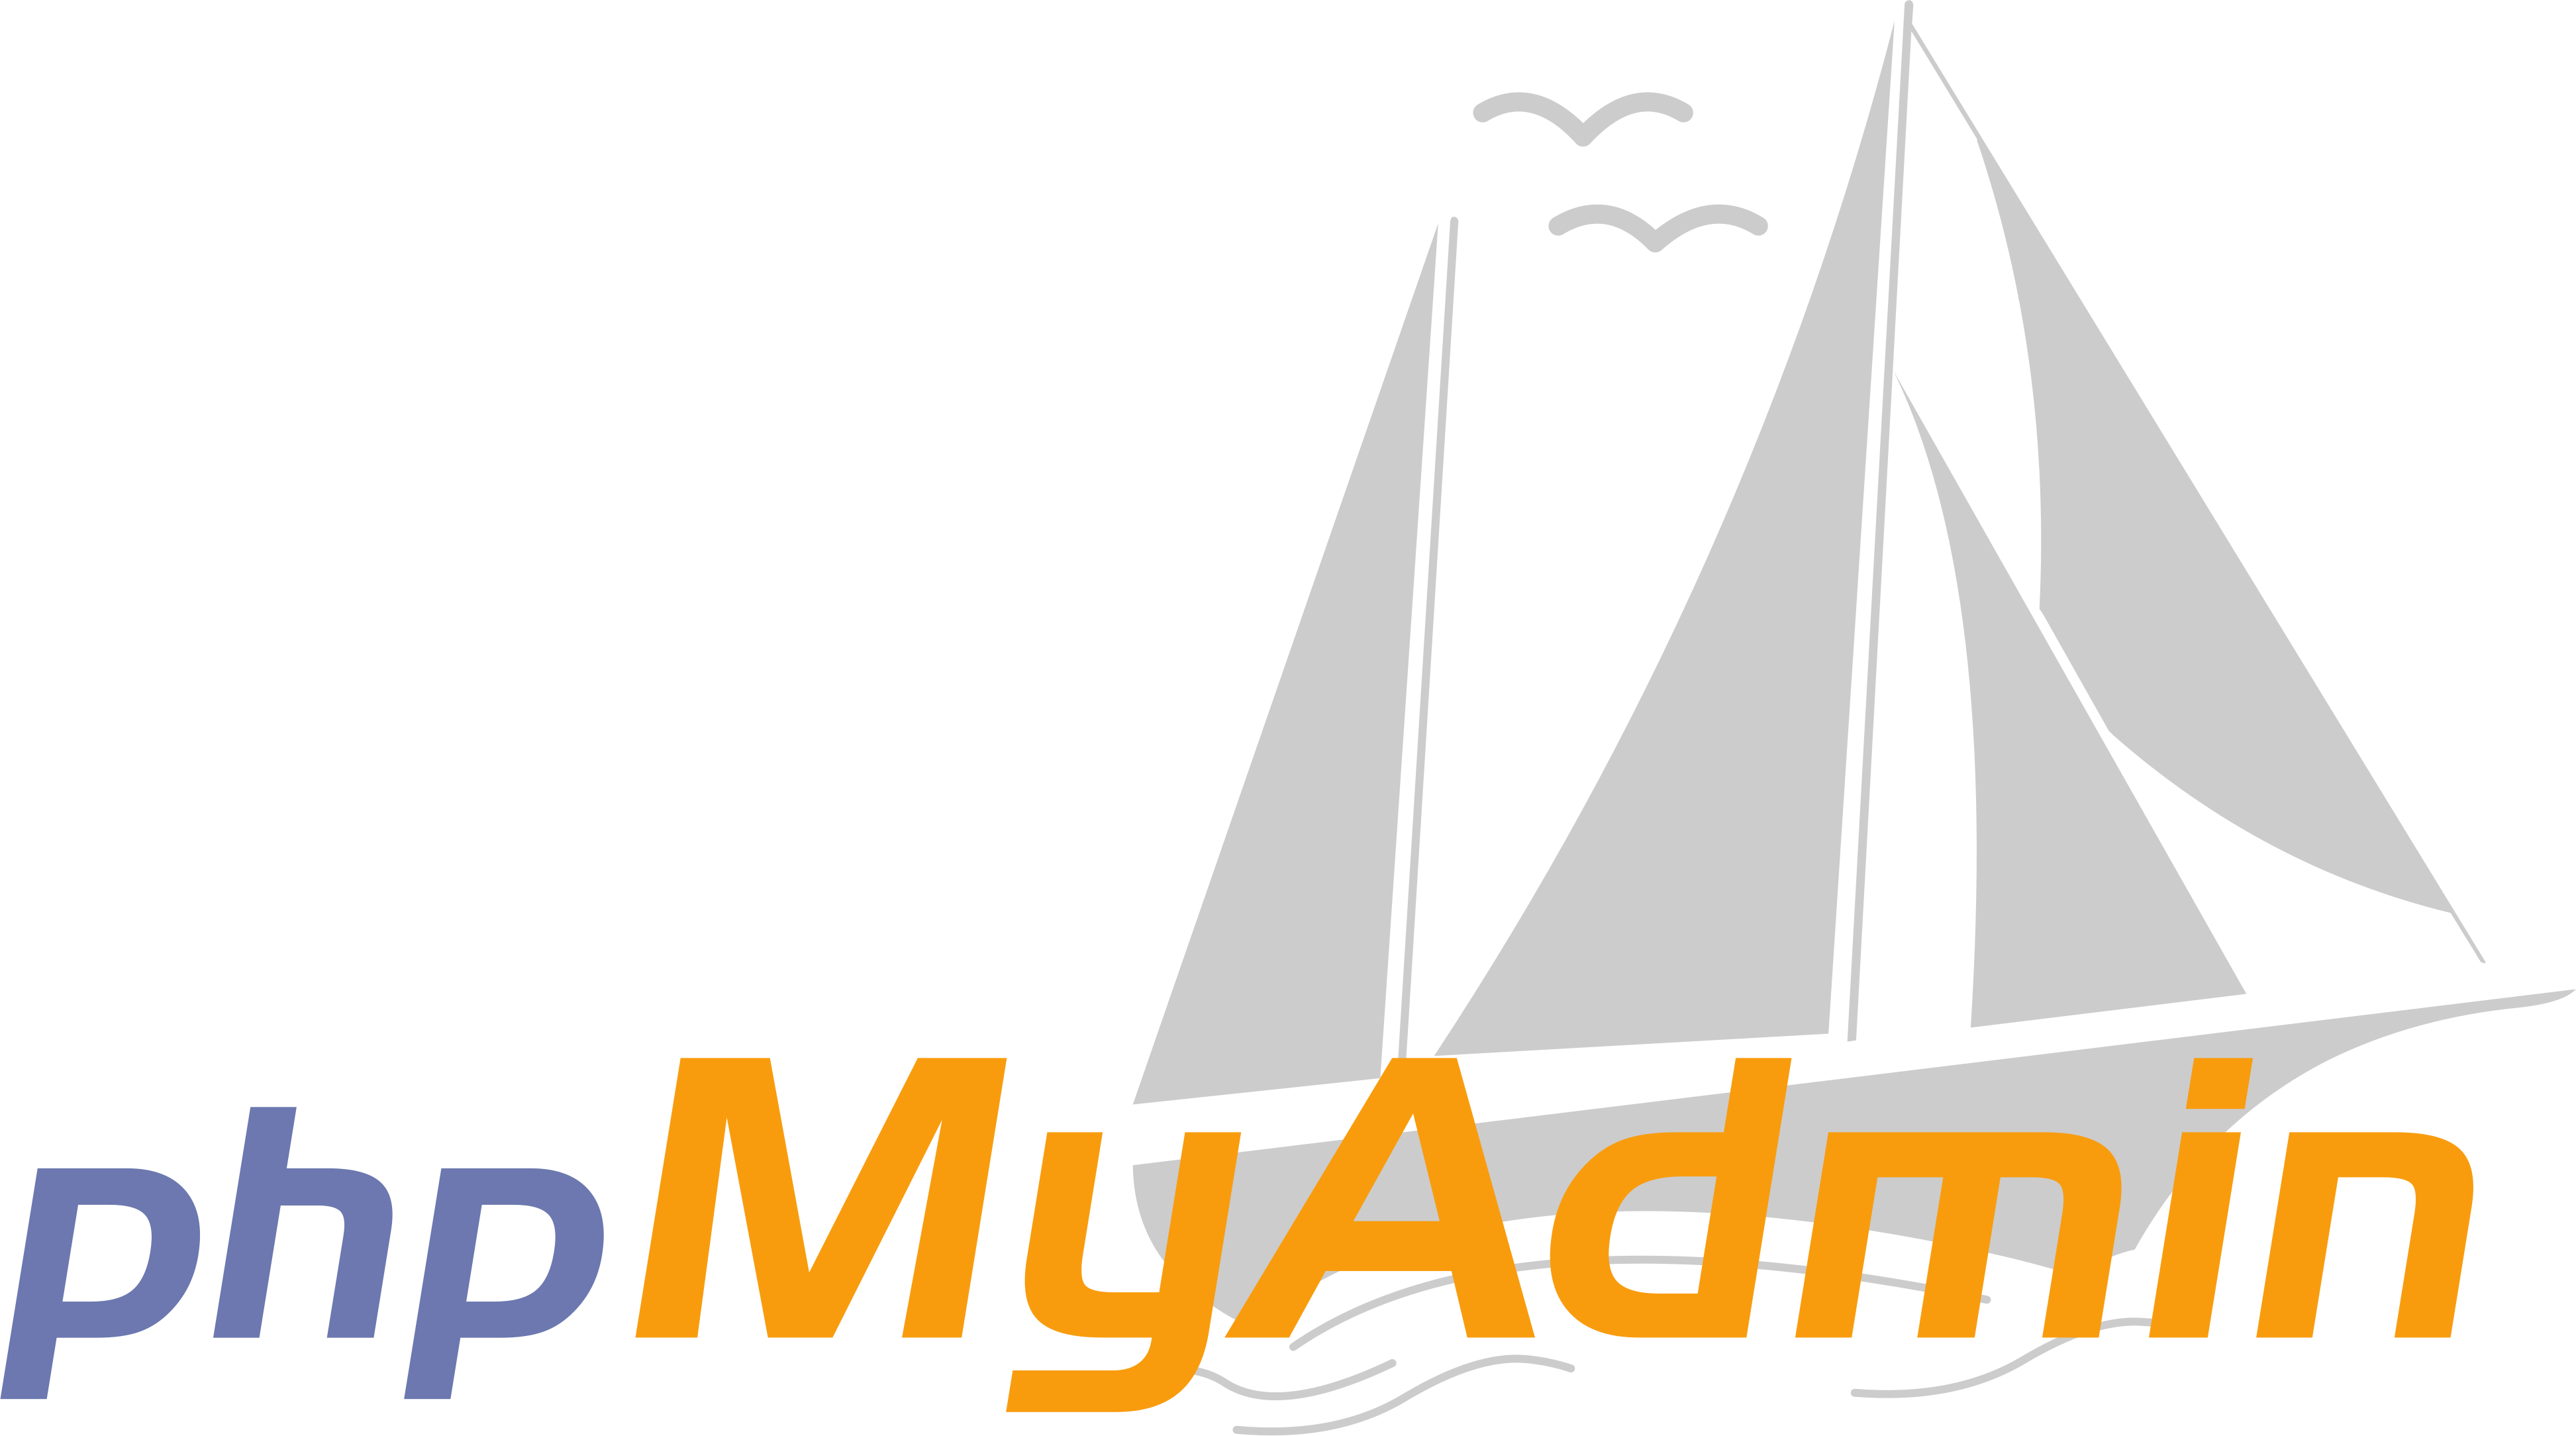 phpMyAdmin-Logo-PNG-Image.png